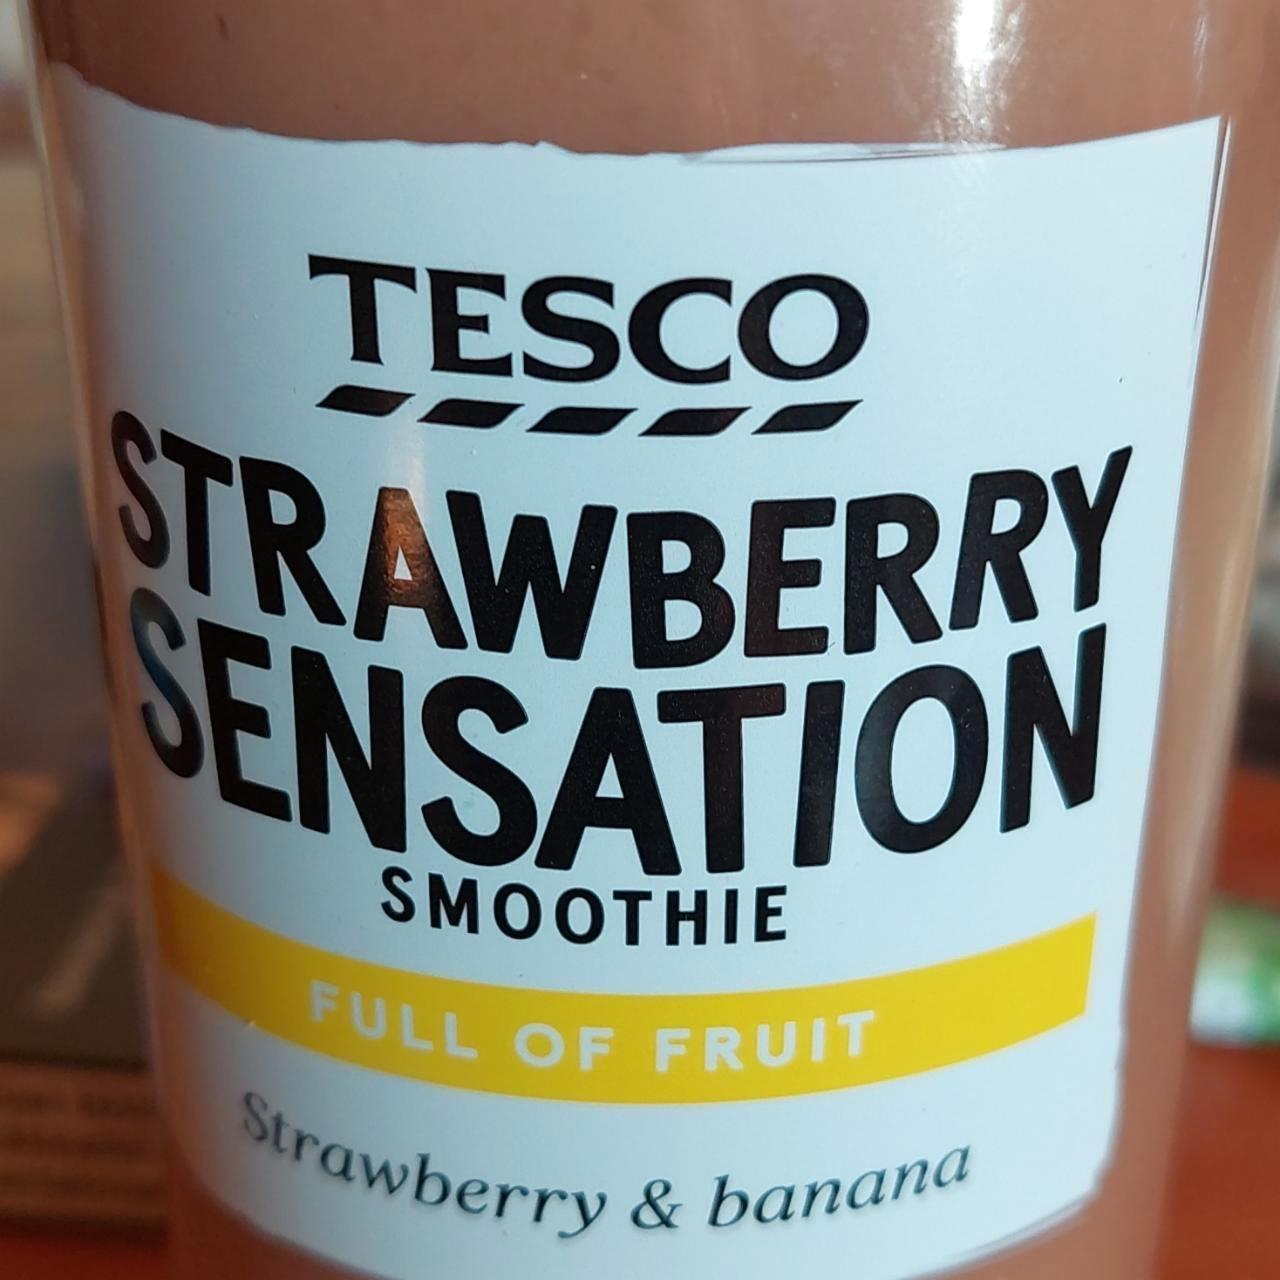 Képek - Strawberry sensation smoothie Tesco